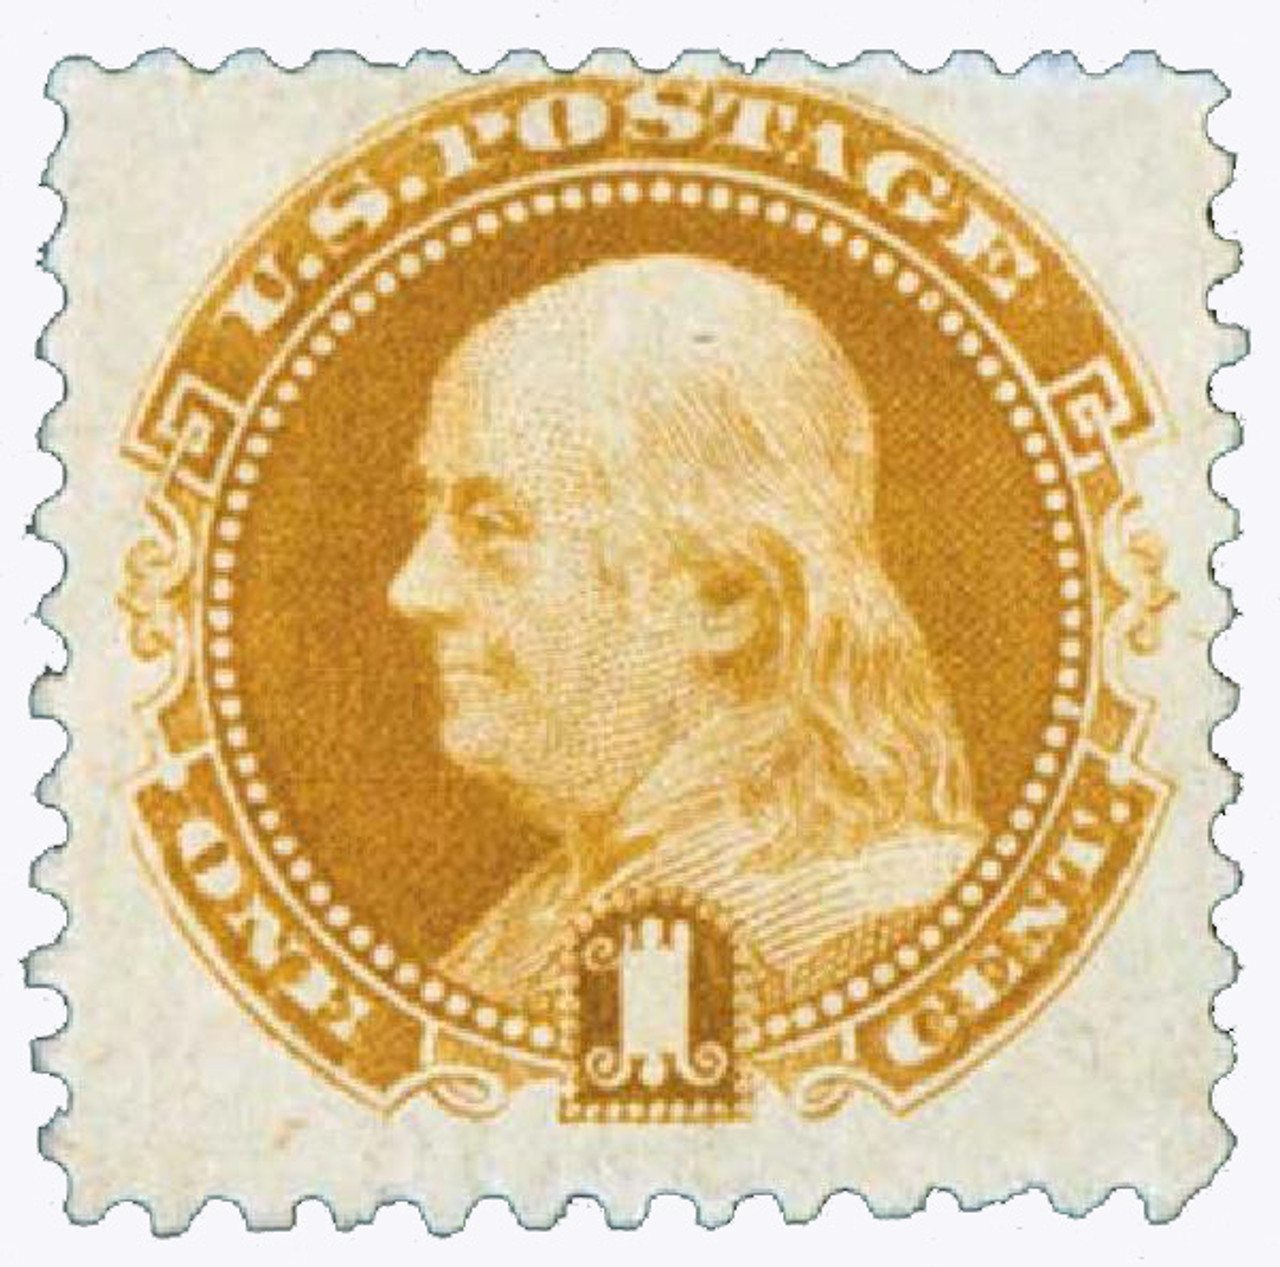 1 - 5¢ Franklin - First U.S. Postage Stamp